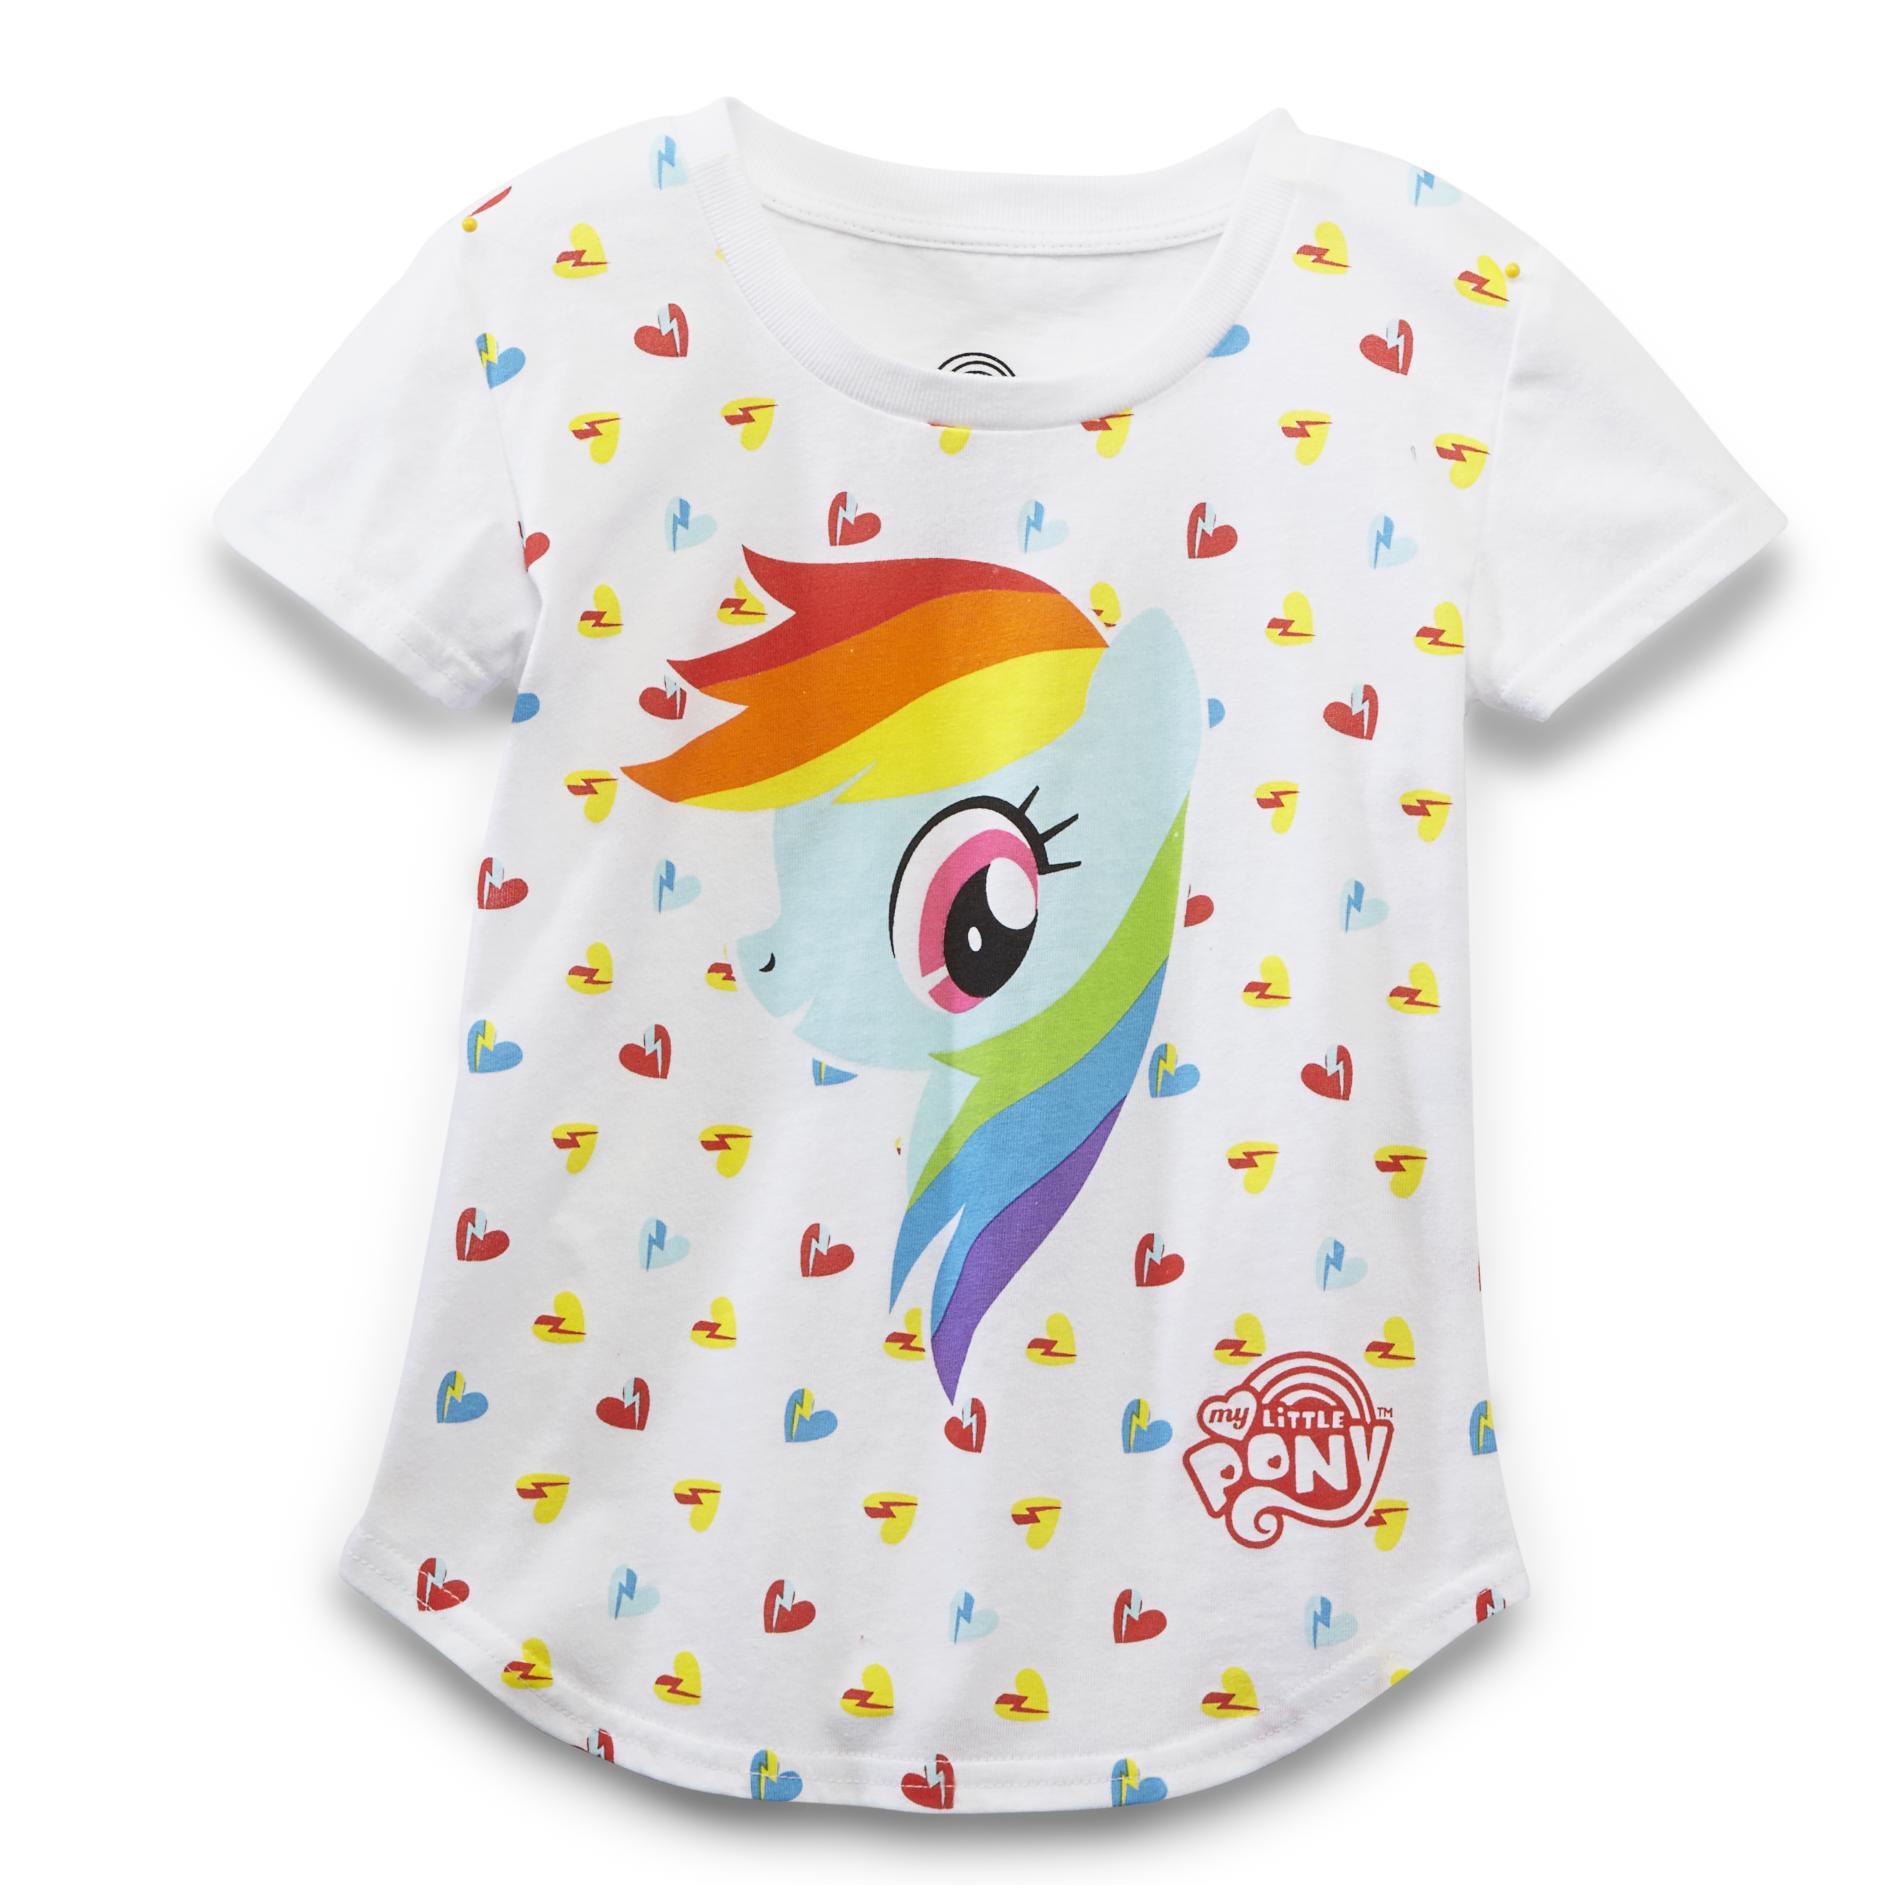 My Little Pony Toddler Girl's Top - Rainbow Dash